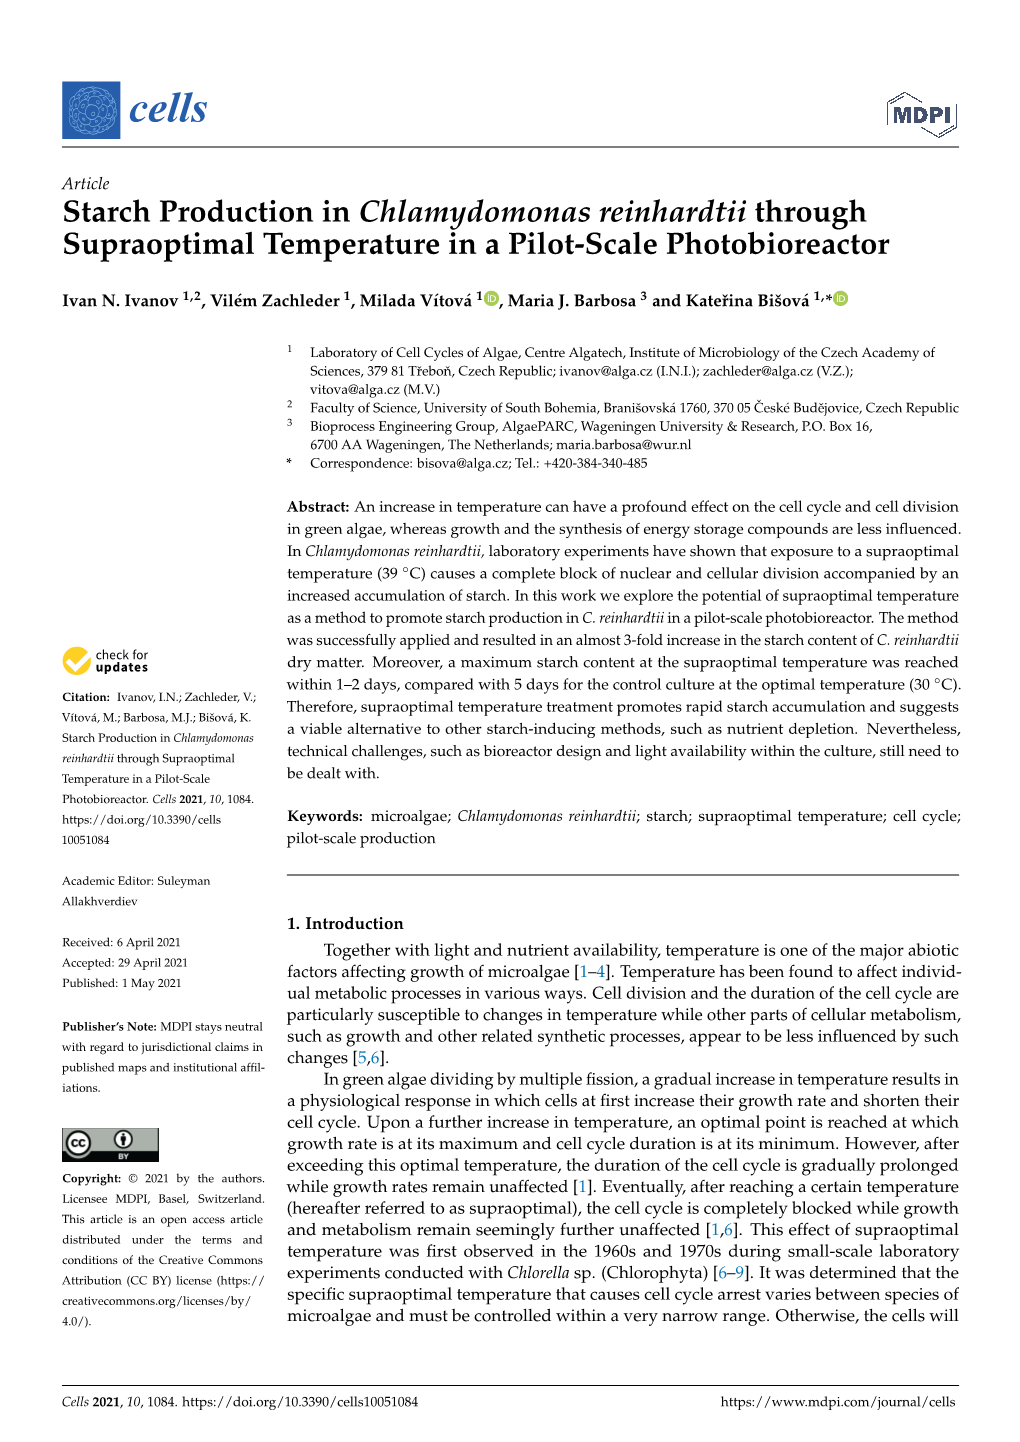 Starch Production in Chlamydomonas Reinhardtii Through Supraoptimal Temperature in a Pilot-Scale Photobioreactor